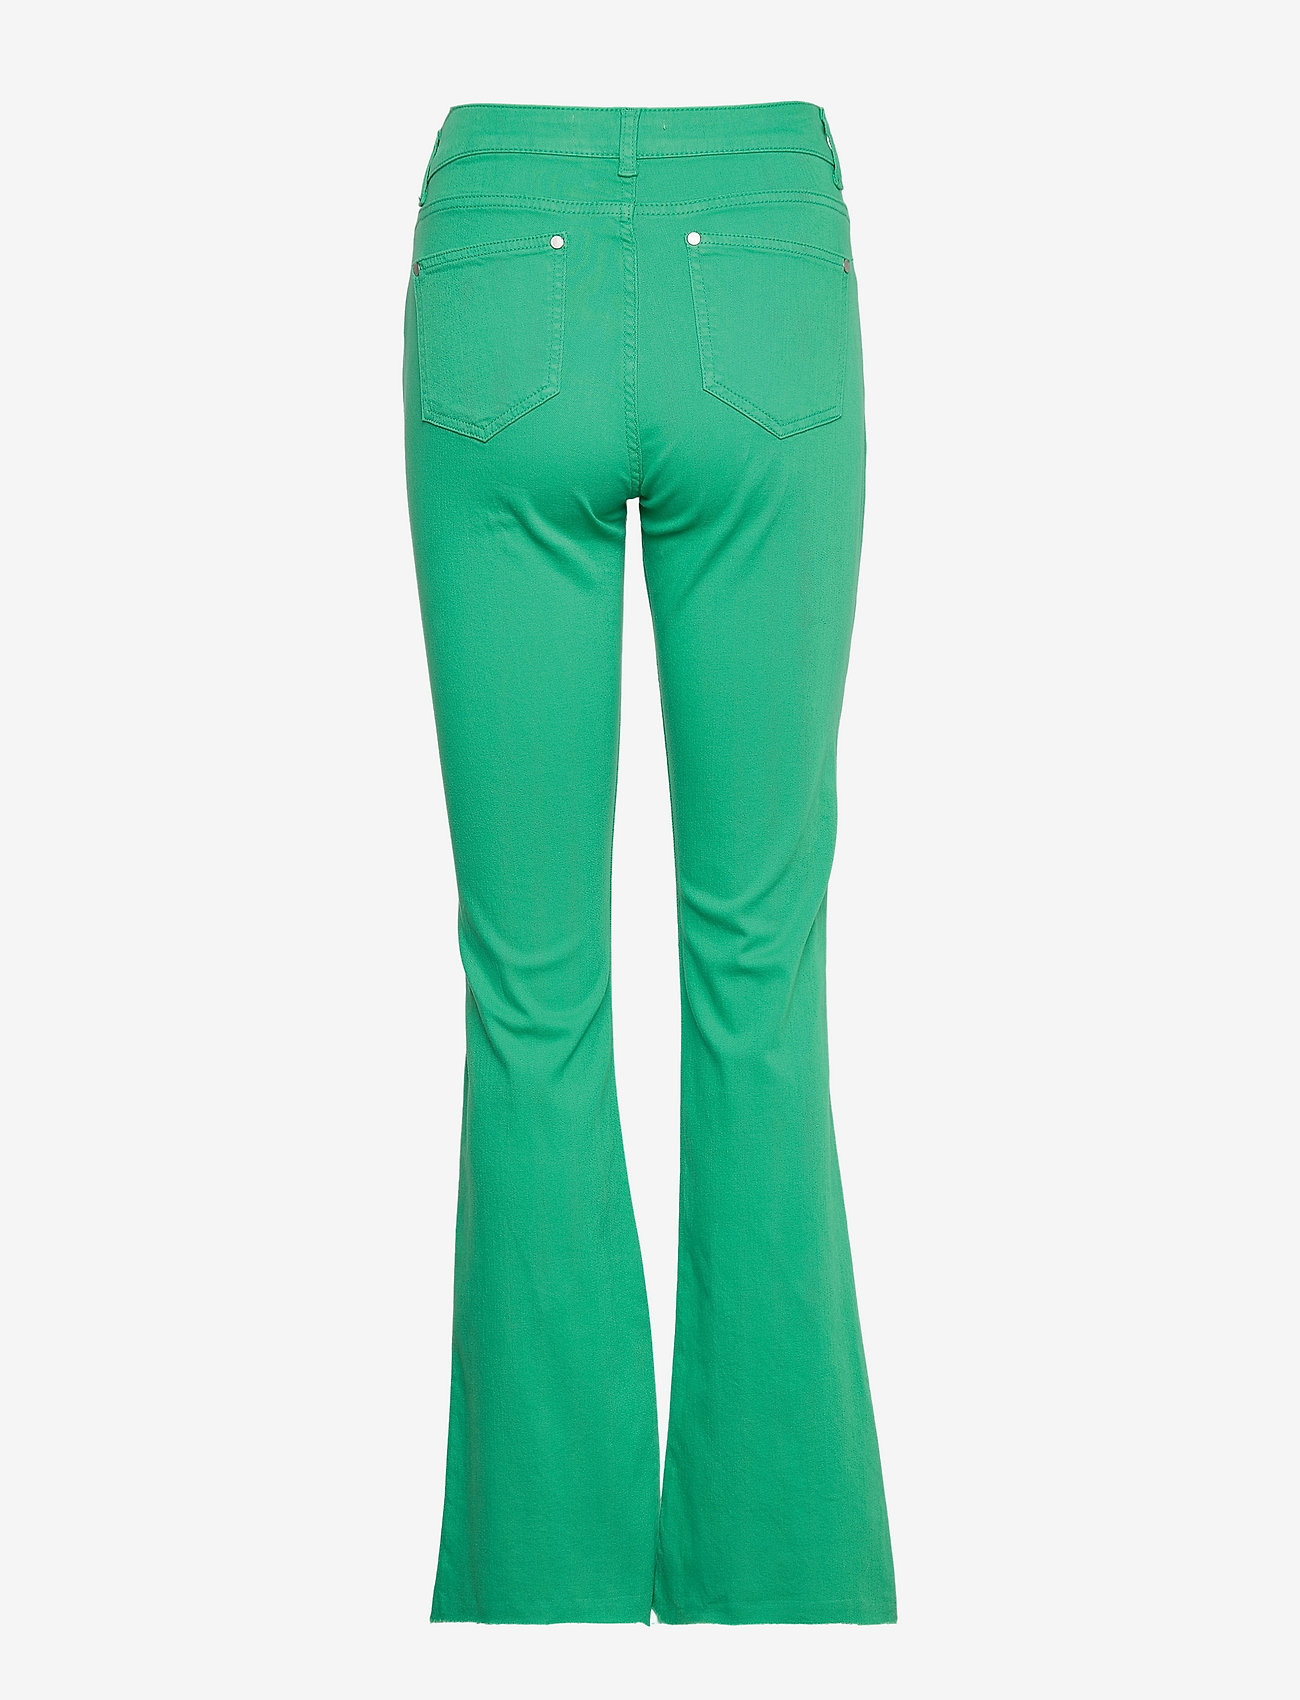 Minus - New Enzo Pants - women - ivy green - 1